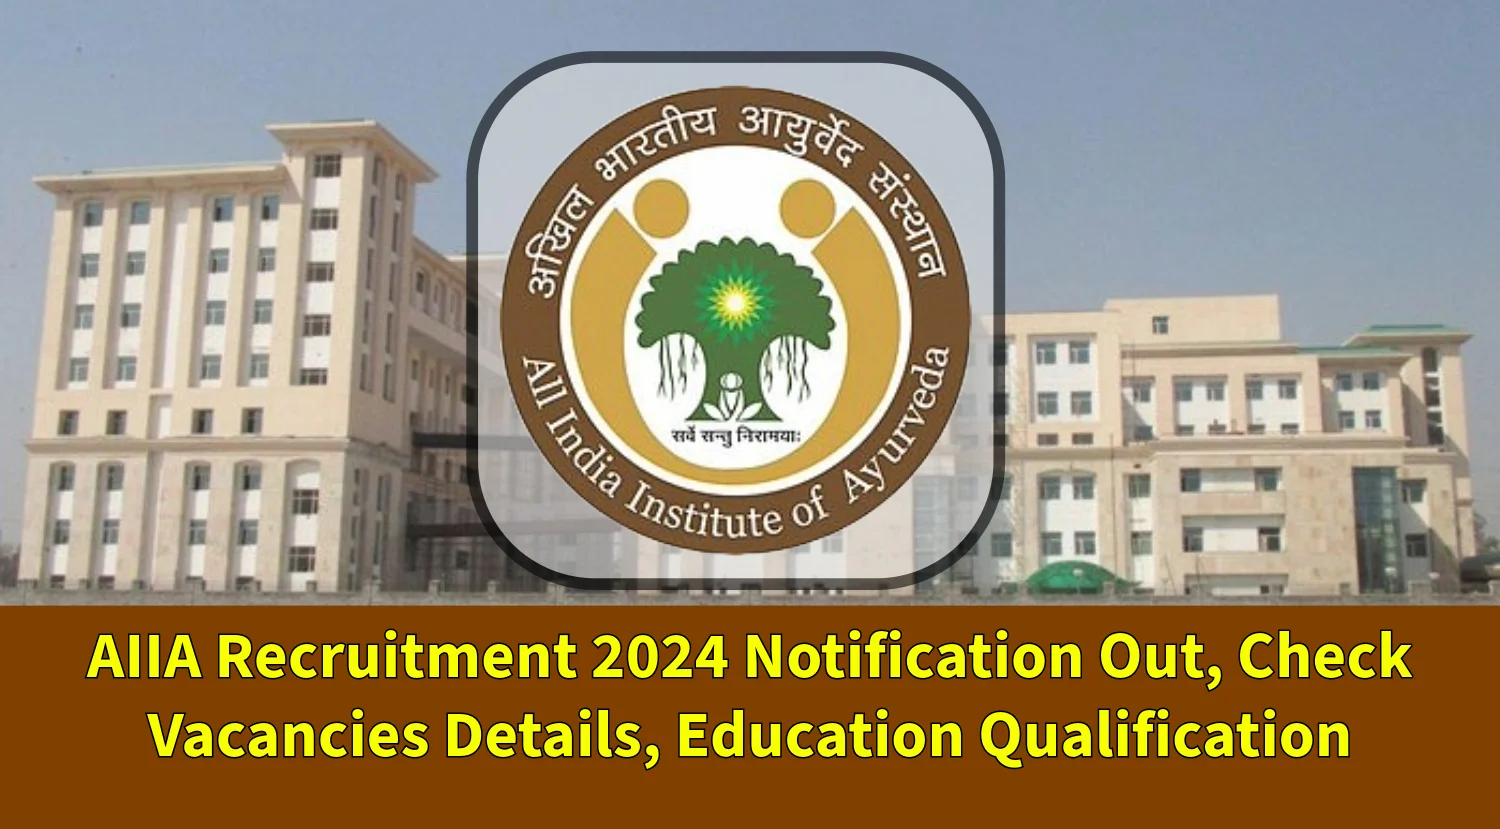 AIIA Recruitment 2024 Notification Out, Check Vacancies Details, Education Qualification